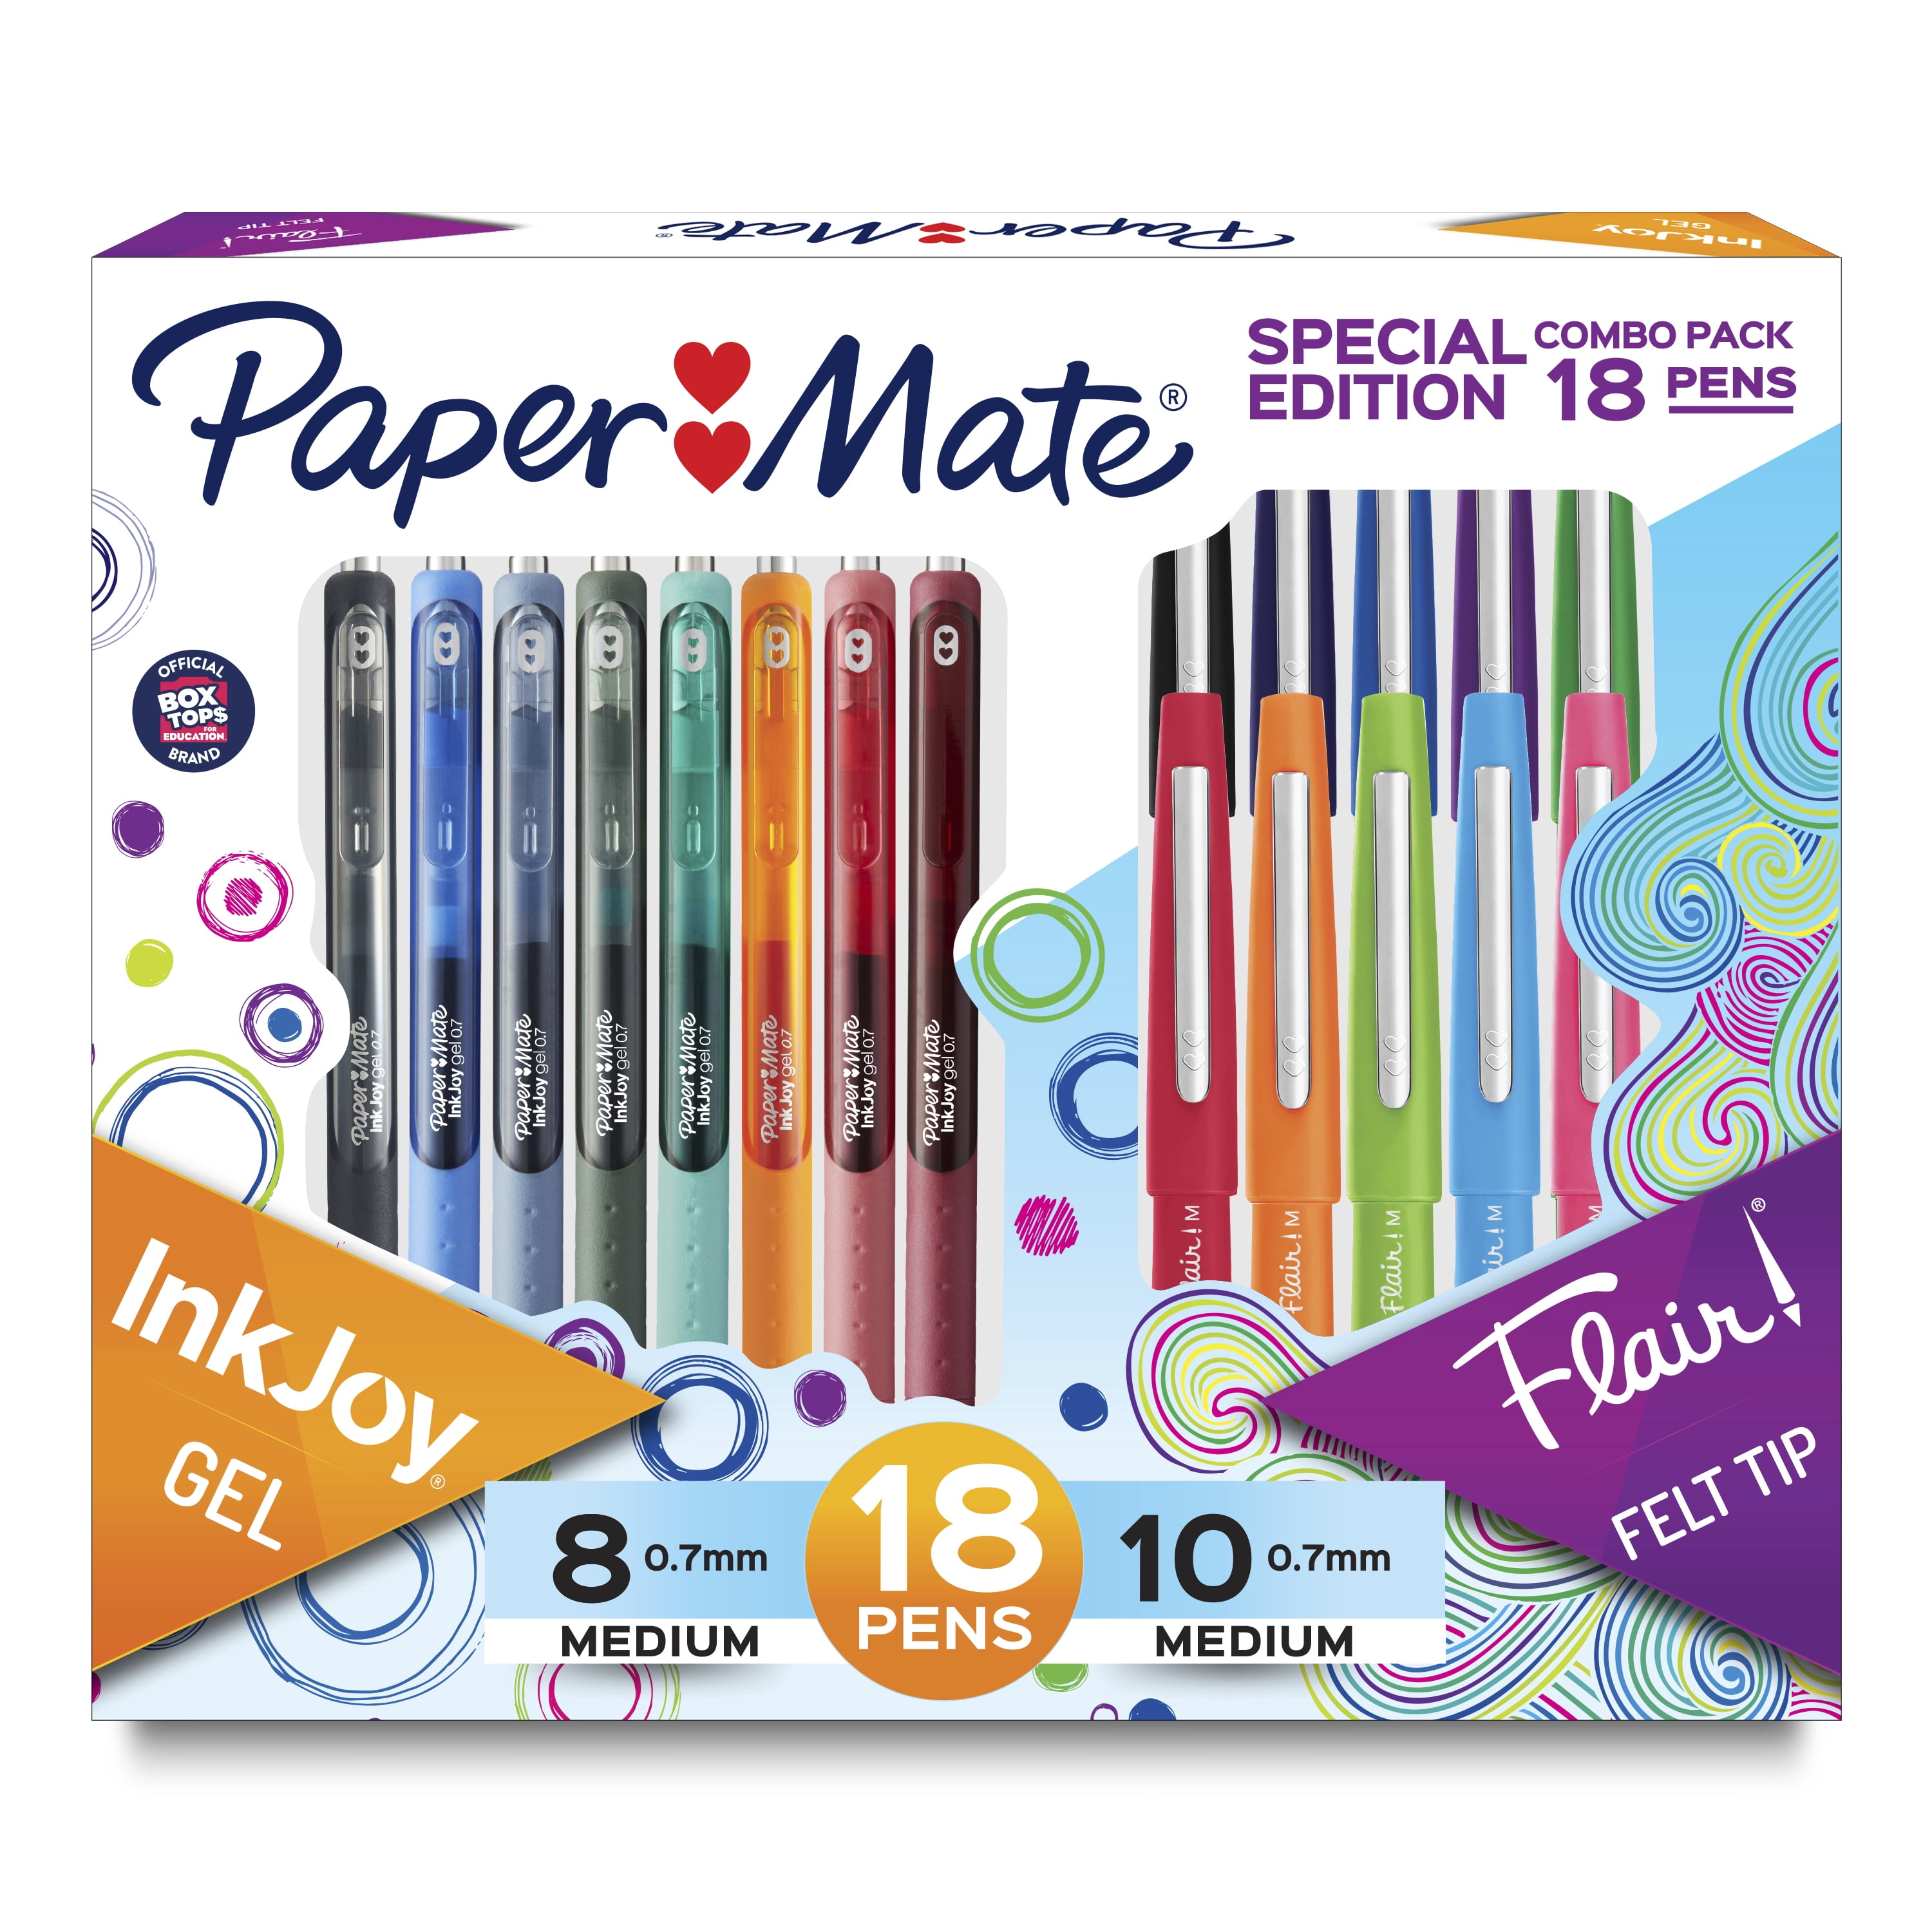 Paper Mate® Flair® Retro Accents™ 6 Color Felt Tip Pen Set